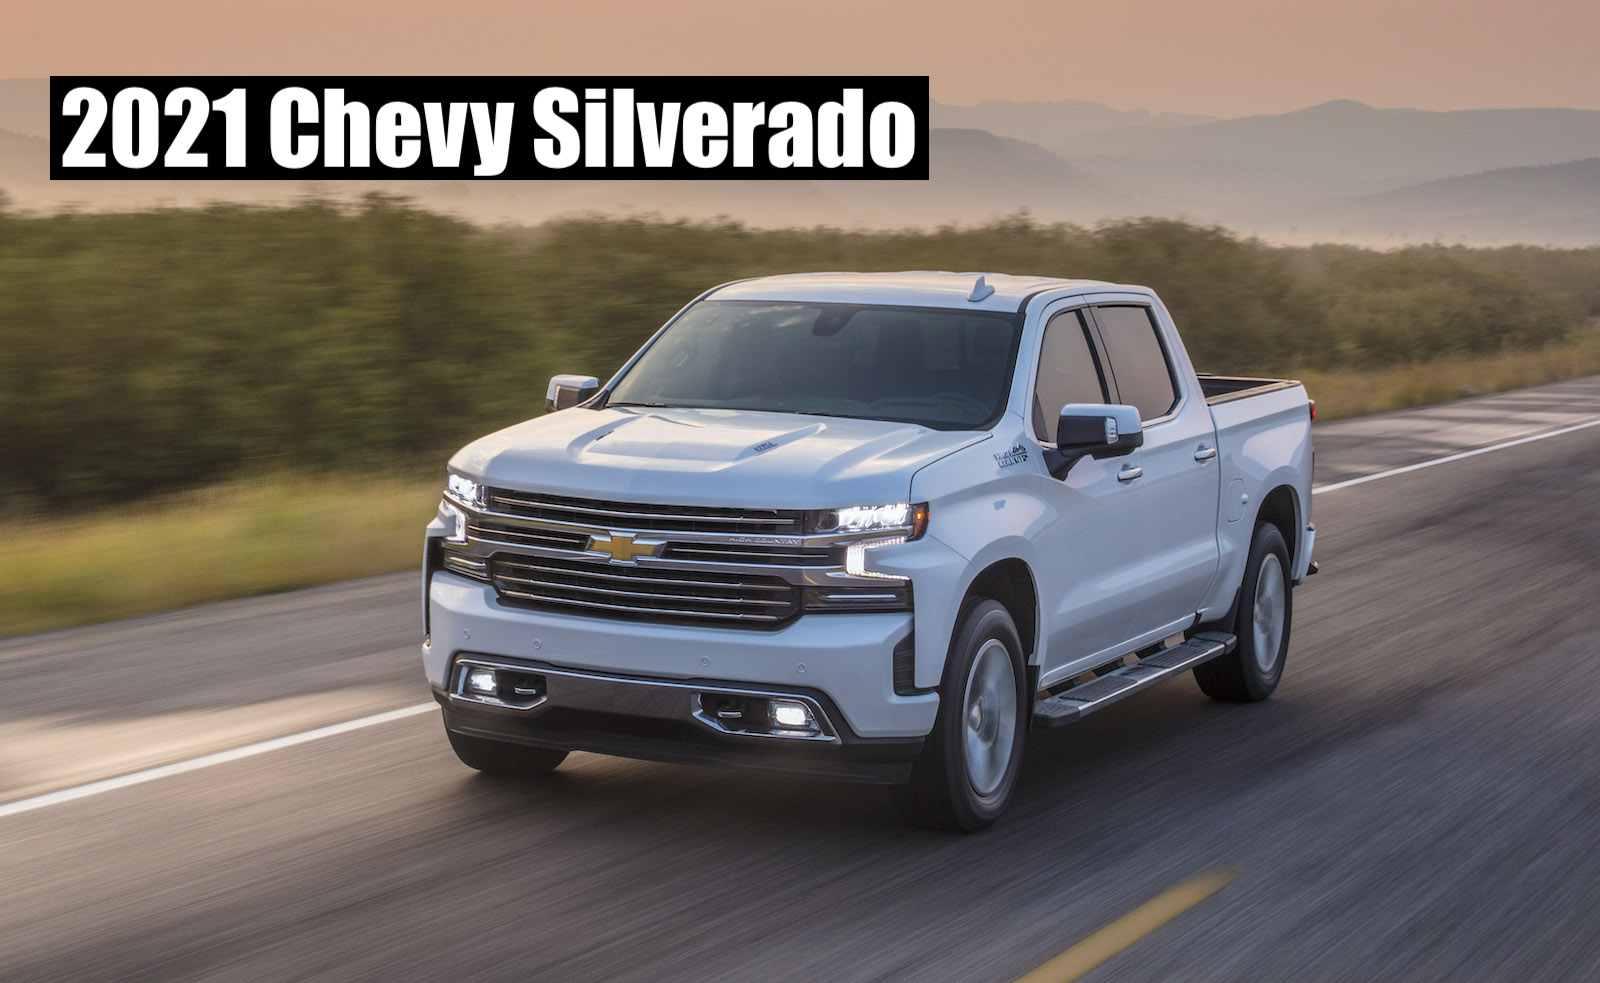 2021 Chevrolet Silverado 1500 Ltz Features Price amp Release Date 